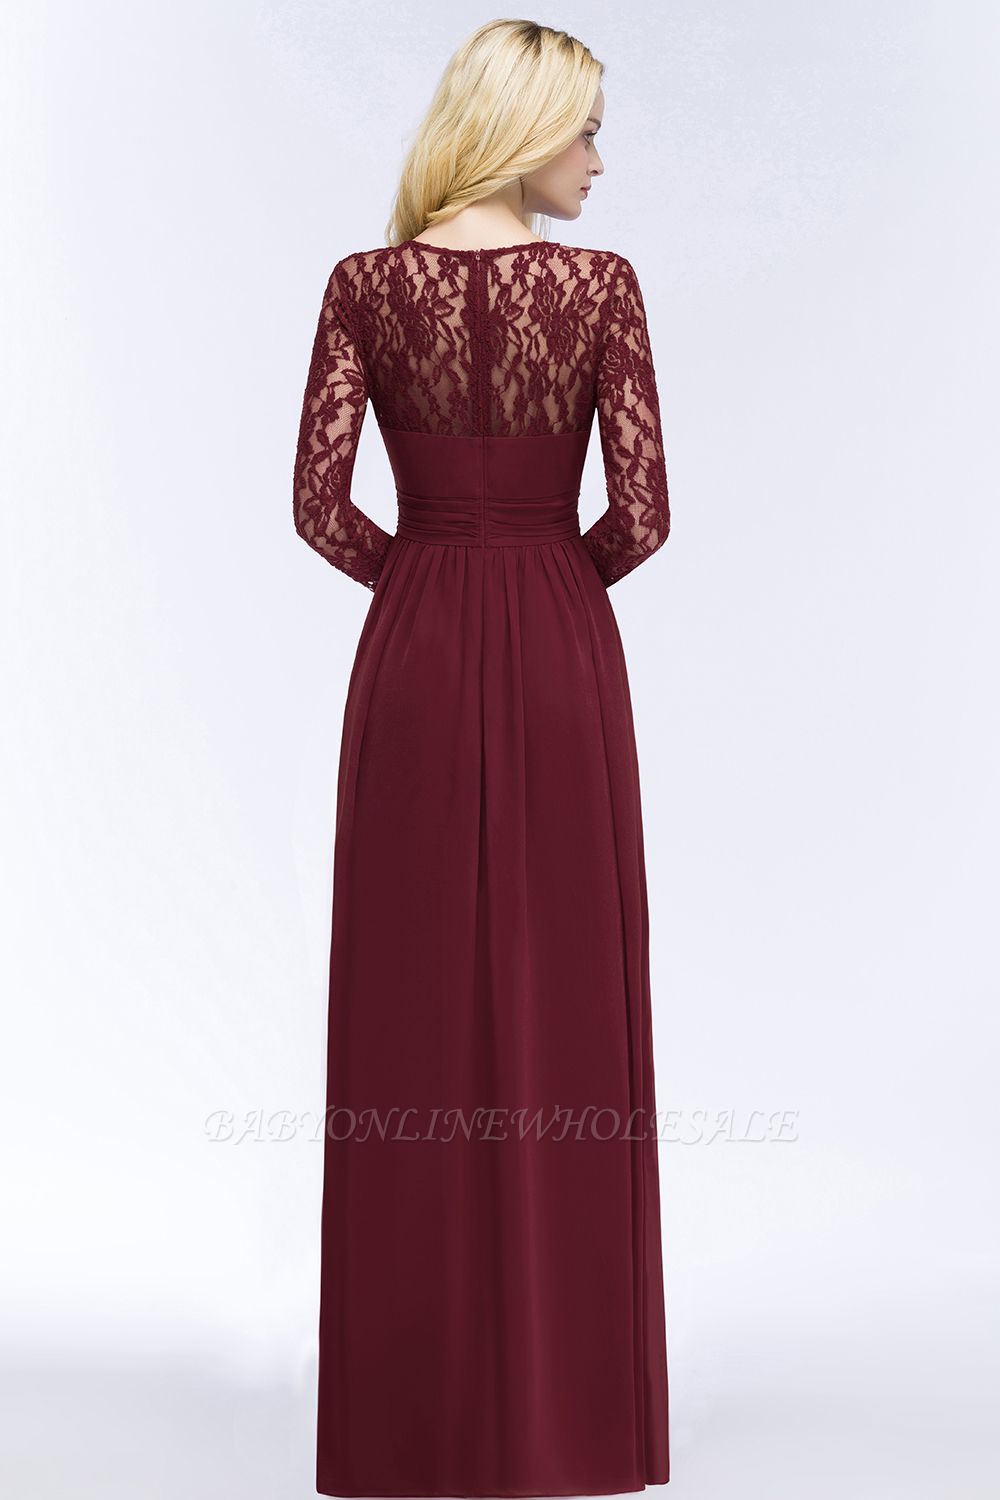 long sleeve burgundy bridesmaid dresses